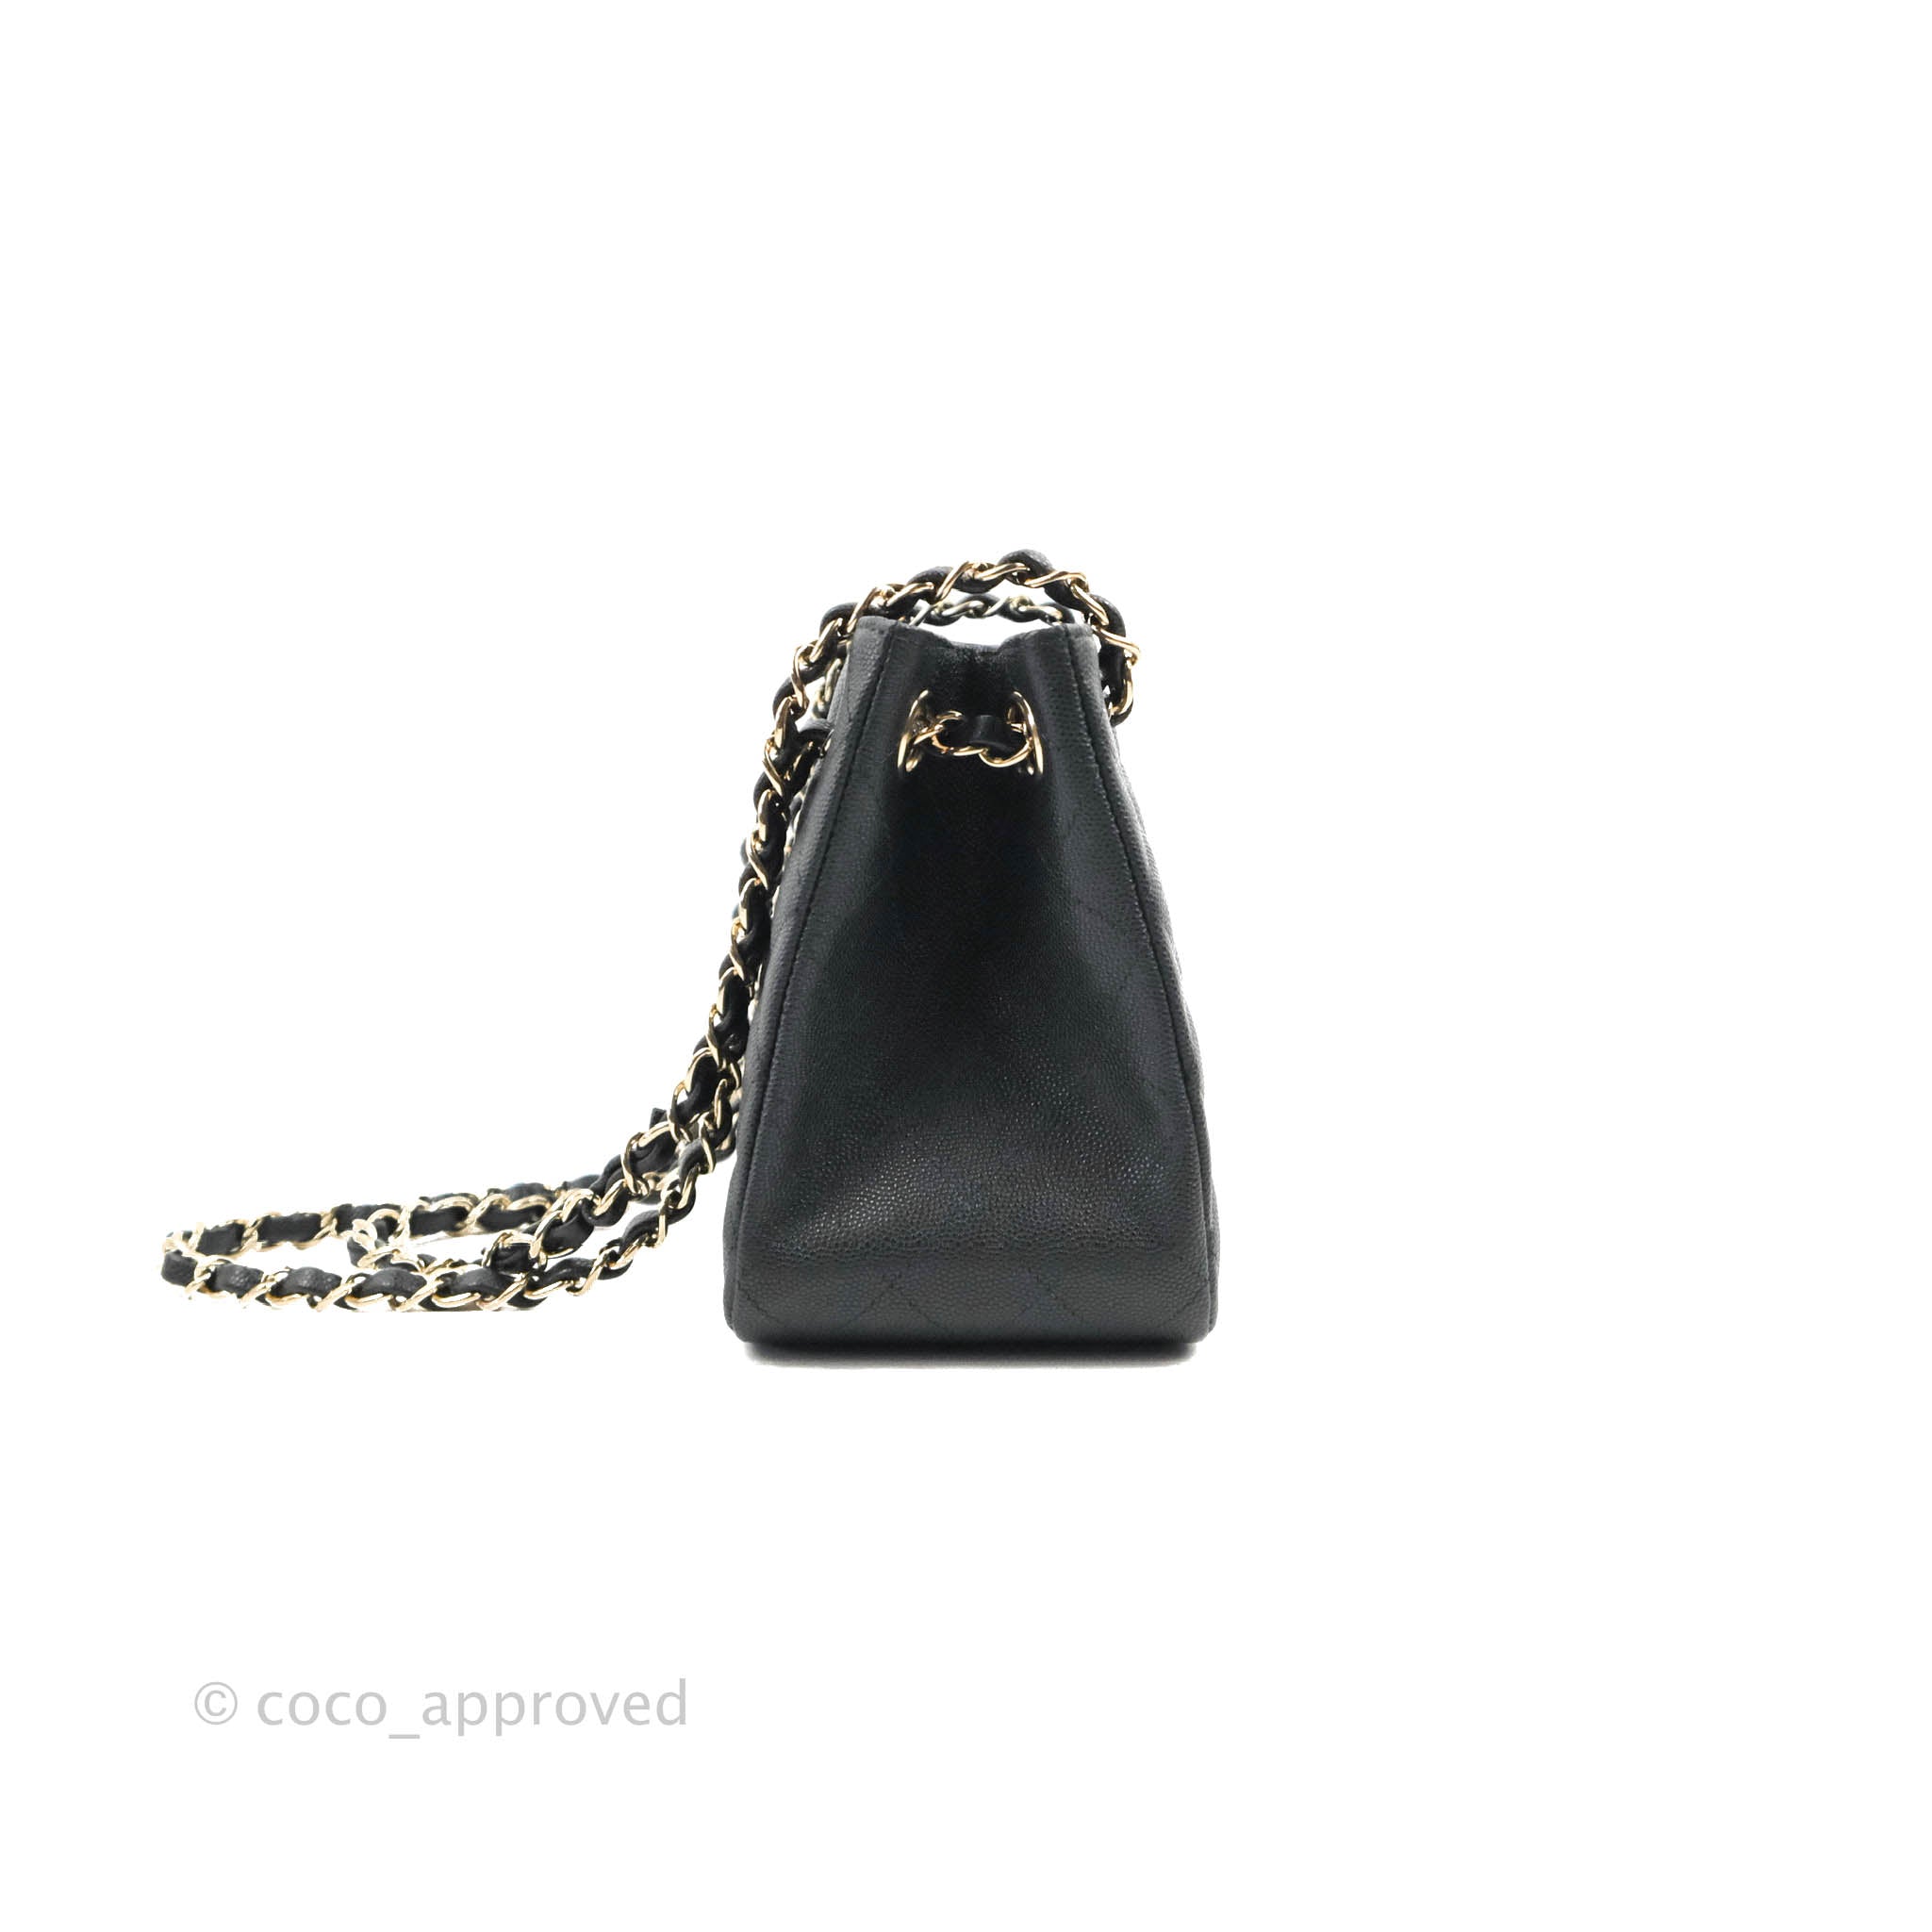 CHANEL Caviar Quilted Mini CC Pocket Bucket Bag Black | FASHIONPHILE